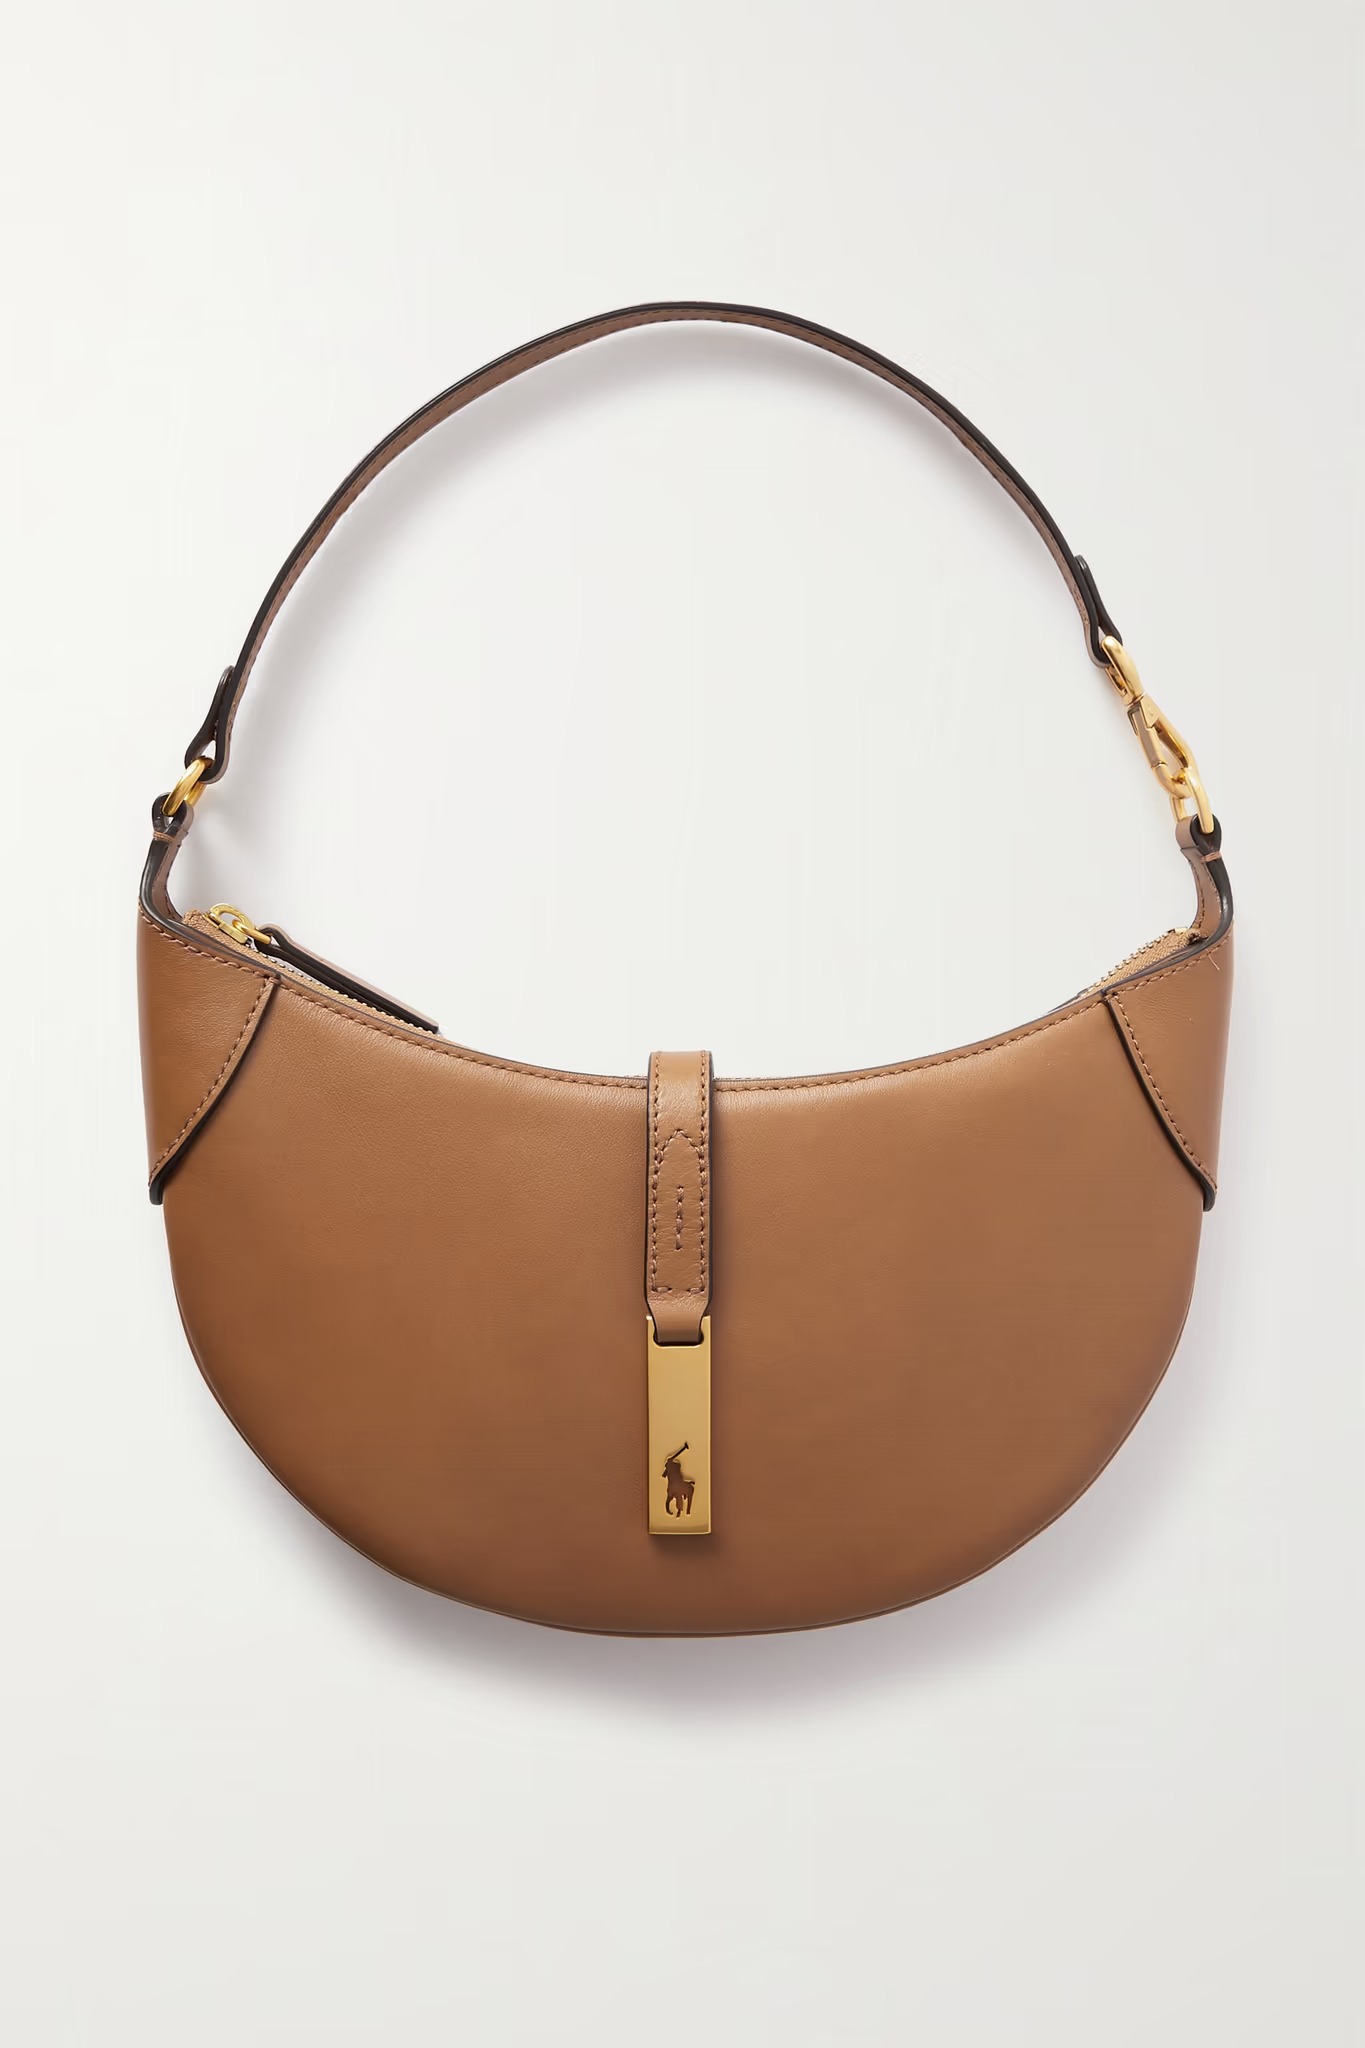 Affordable luxury handbags under €600 / £600 / Best Mid Range